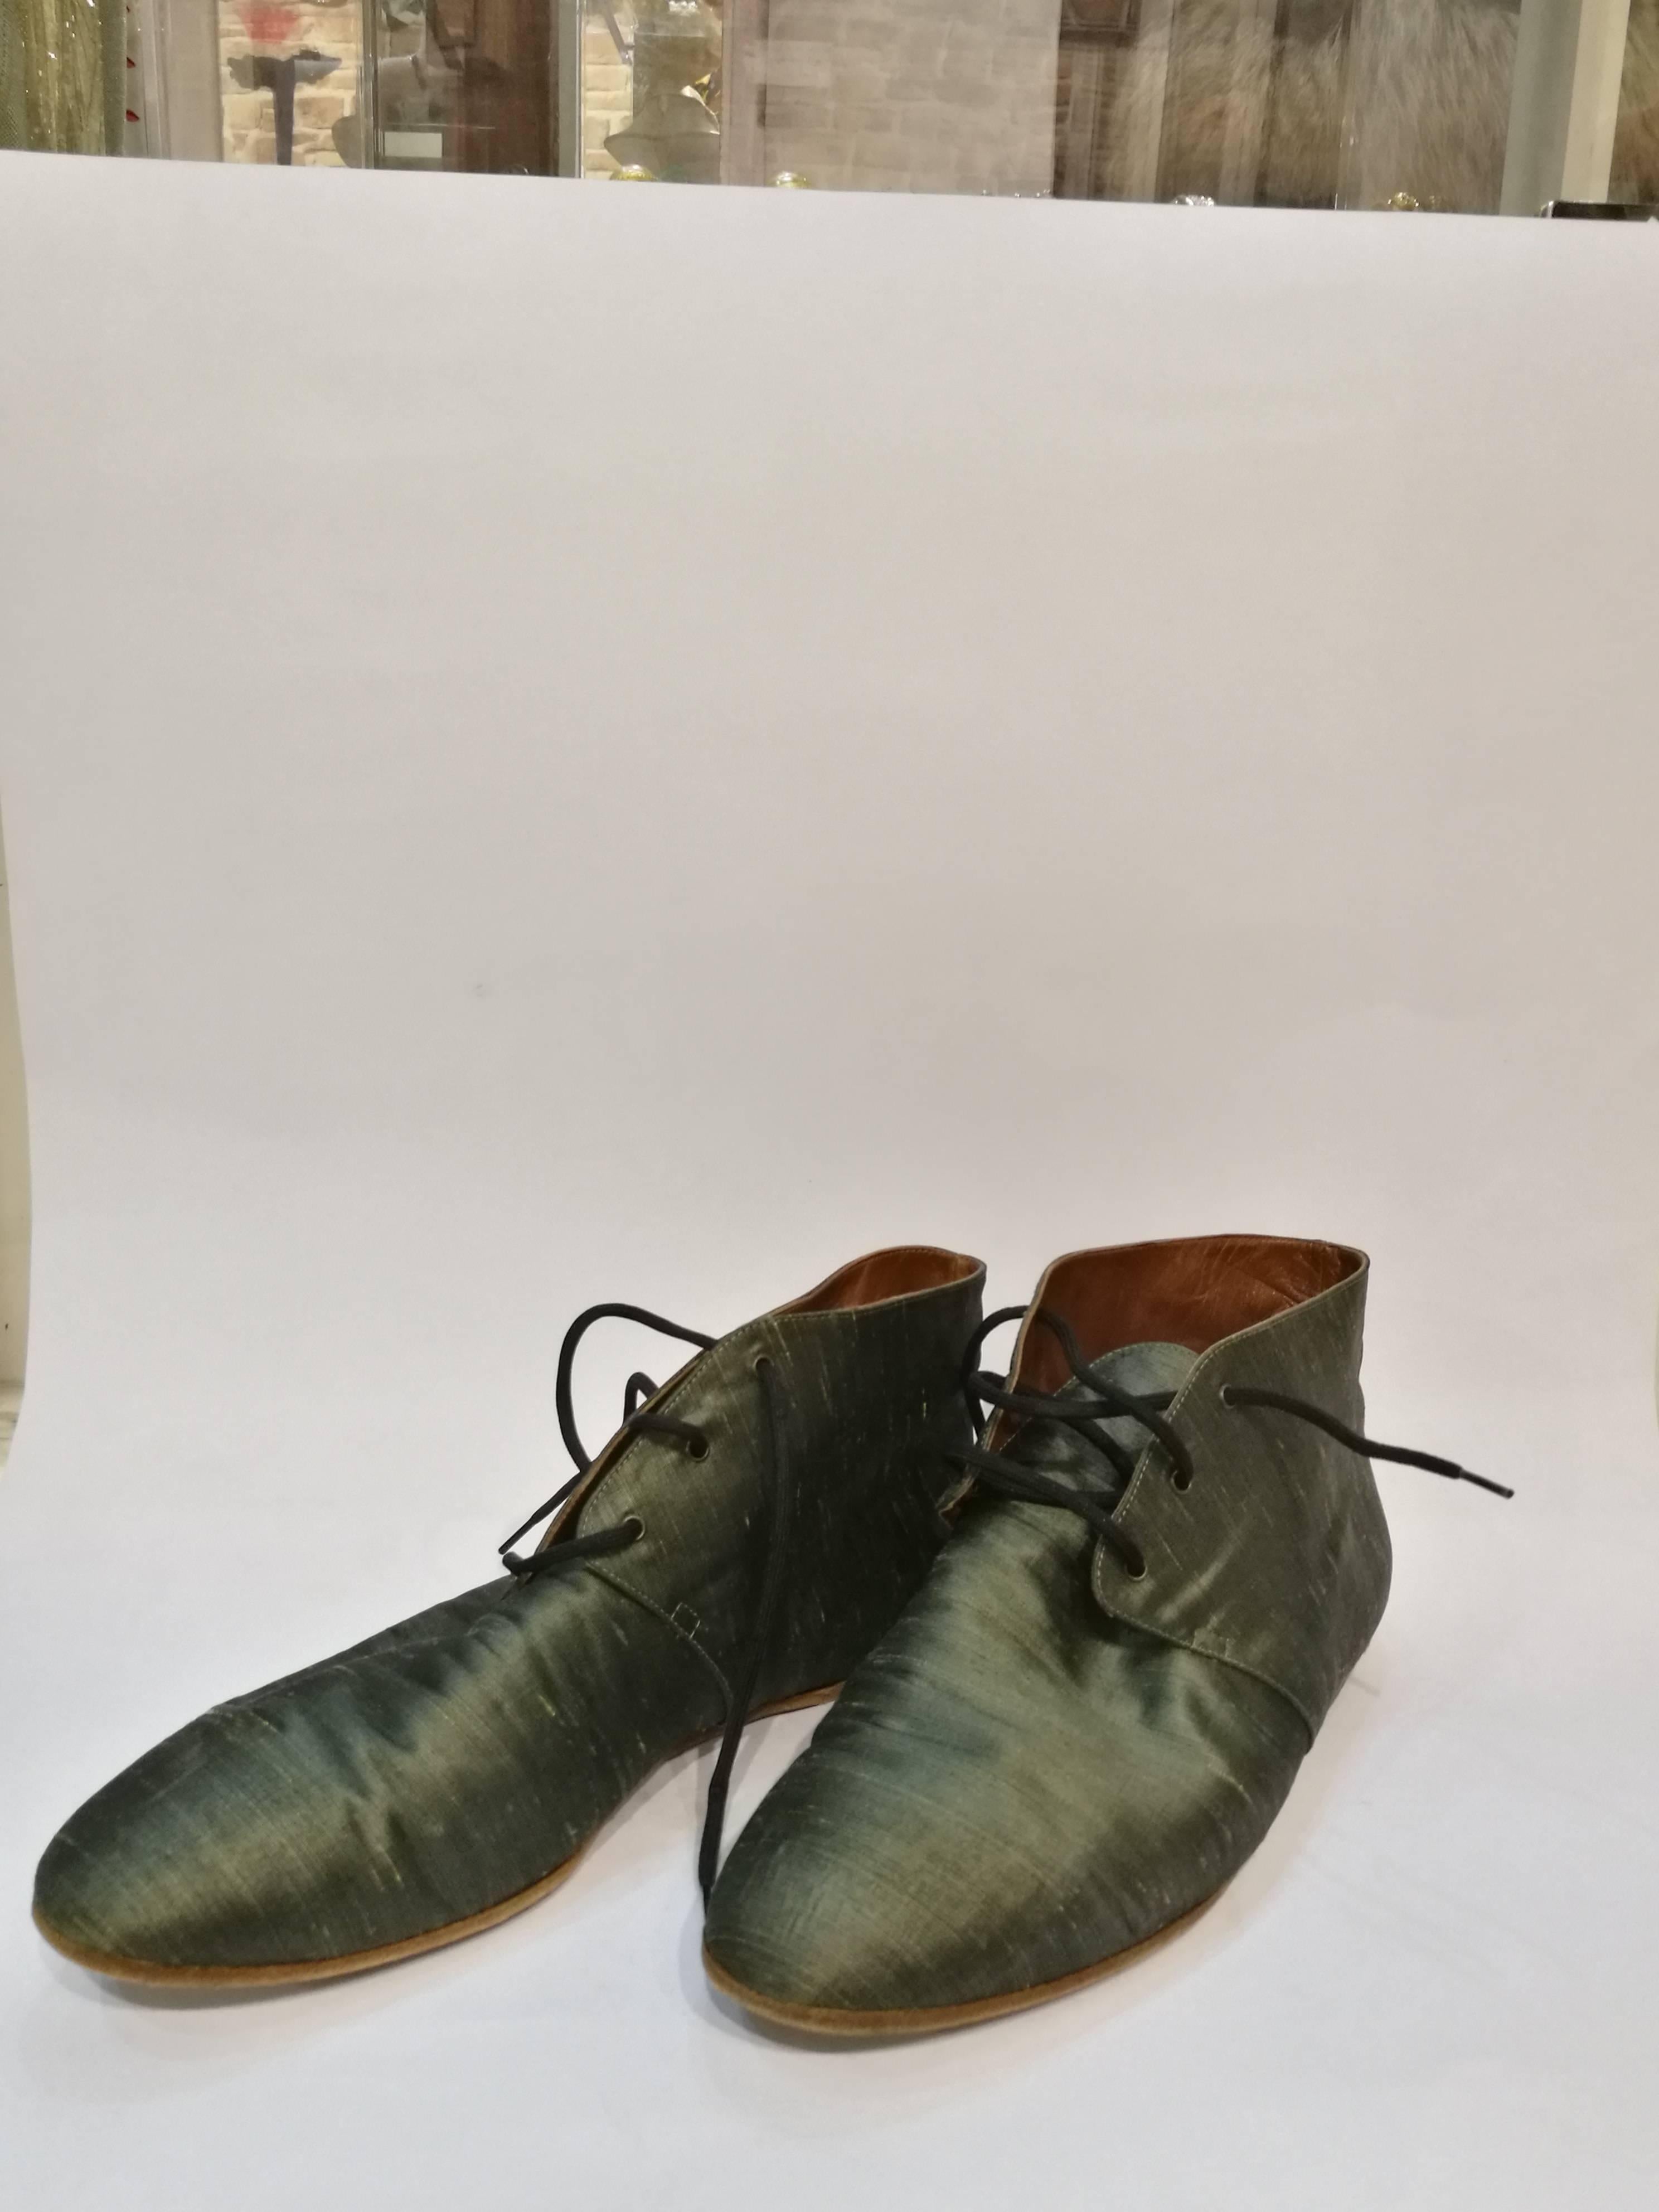 1980s Casadei Green Shoes
Italian size range 39
